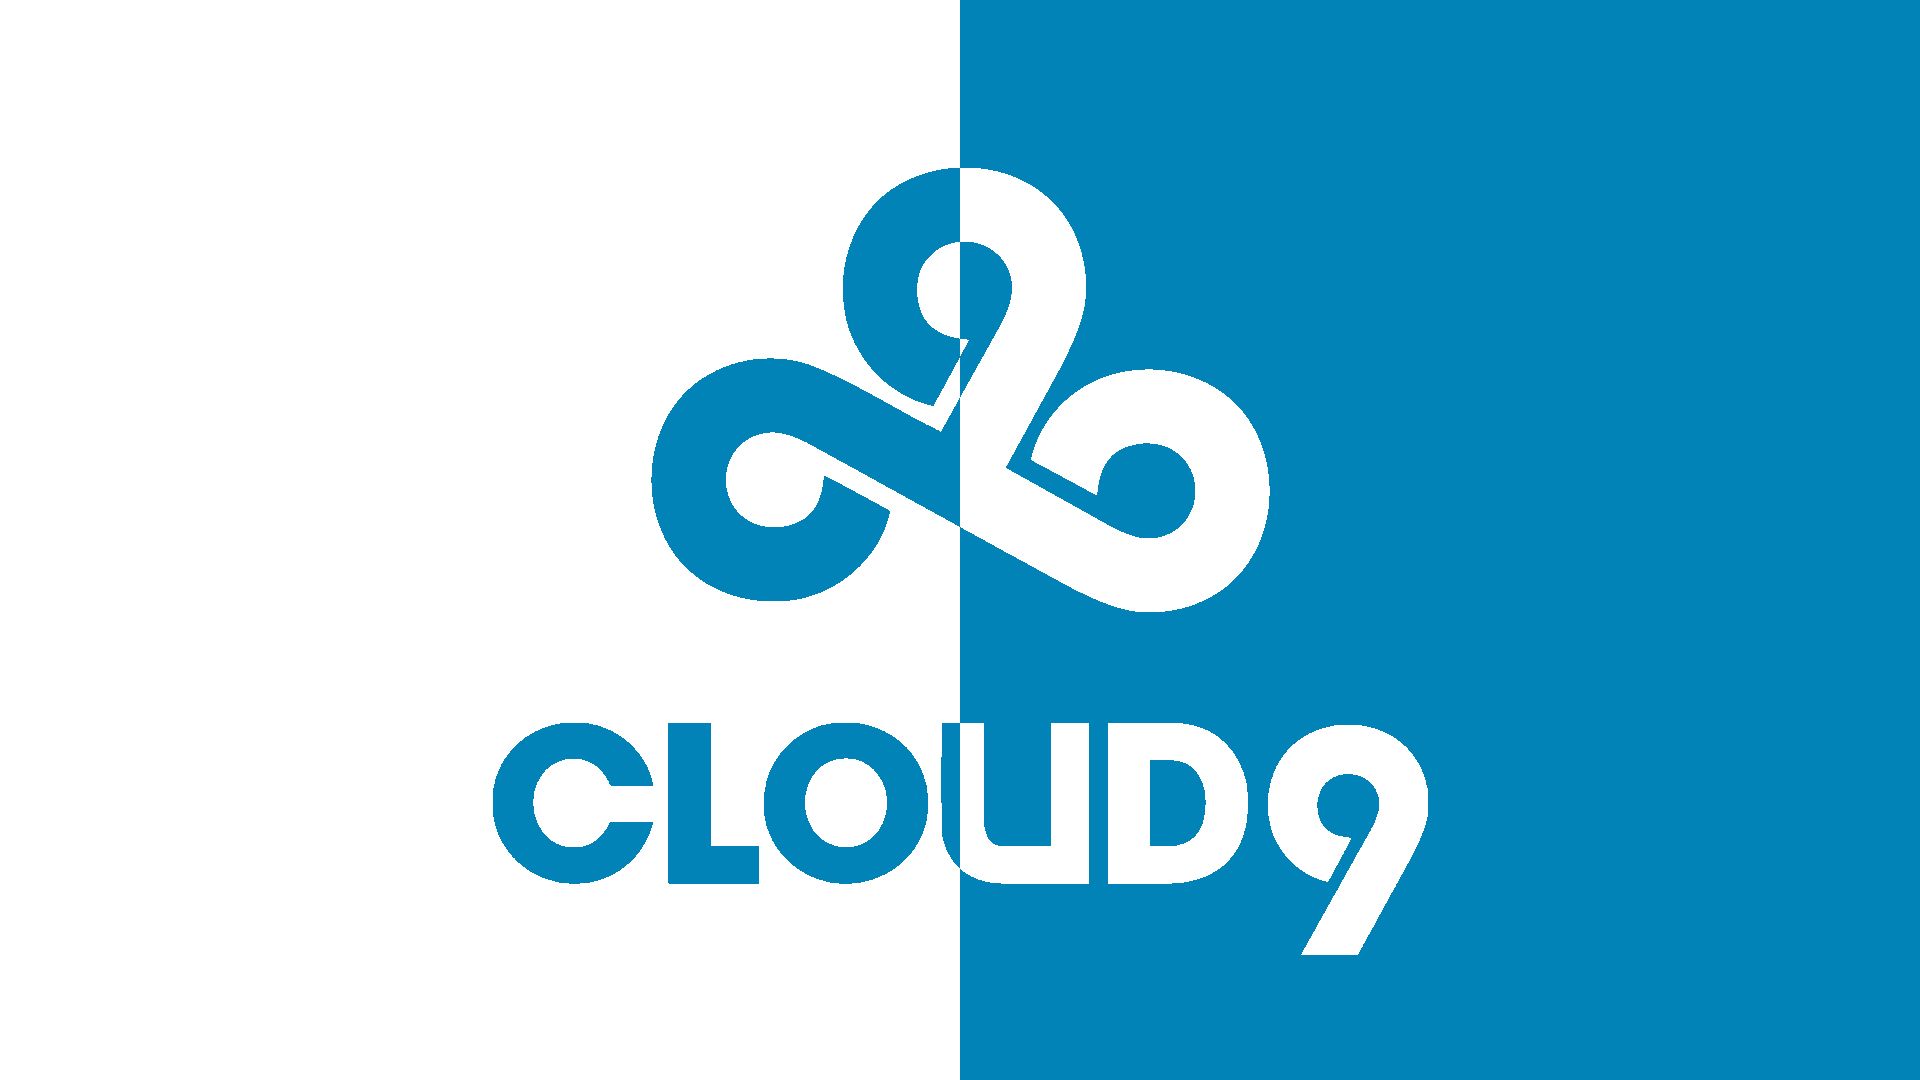 Клауд тим. Клоуд 9. Cloud9 на аву. Логотип cloud9. Лого Клауд 9.